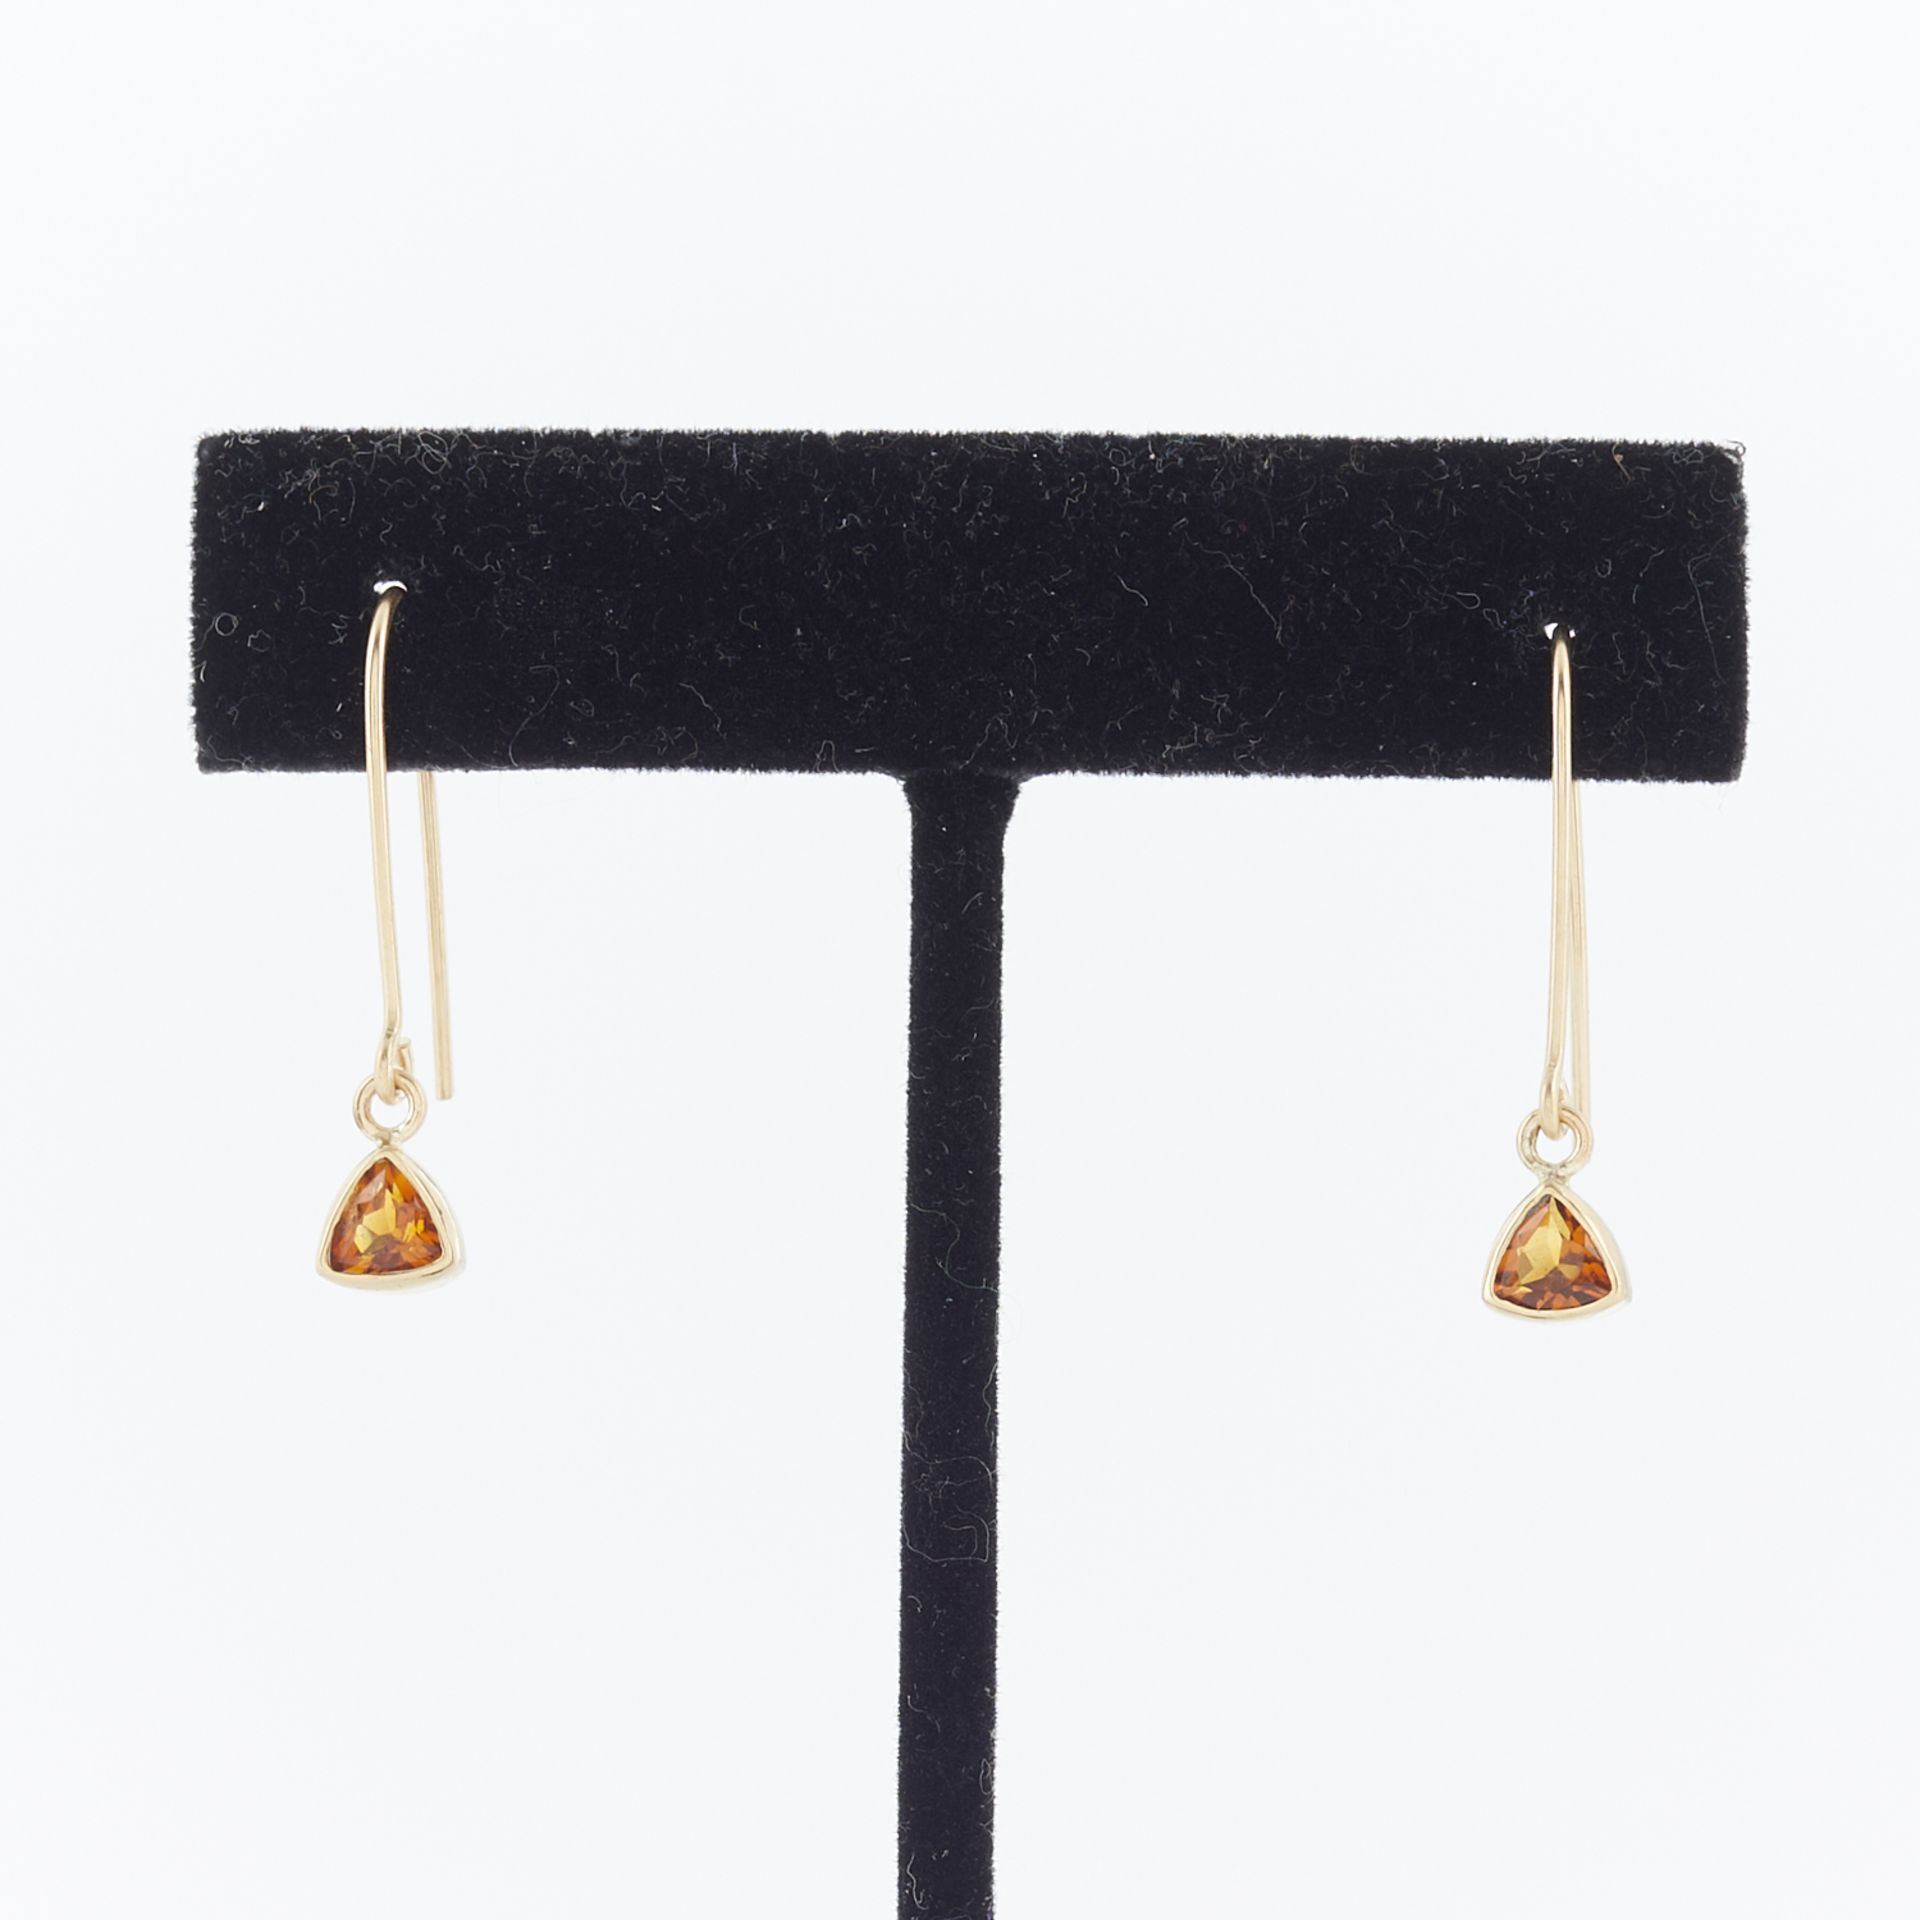 14k Yellow Gold & Citrine Earrings - Image 3 of 7